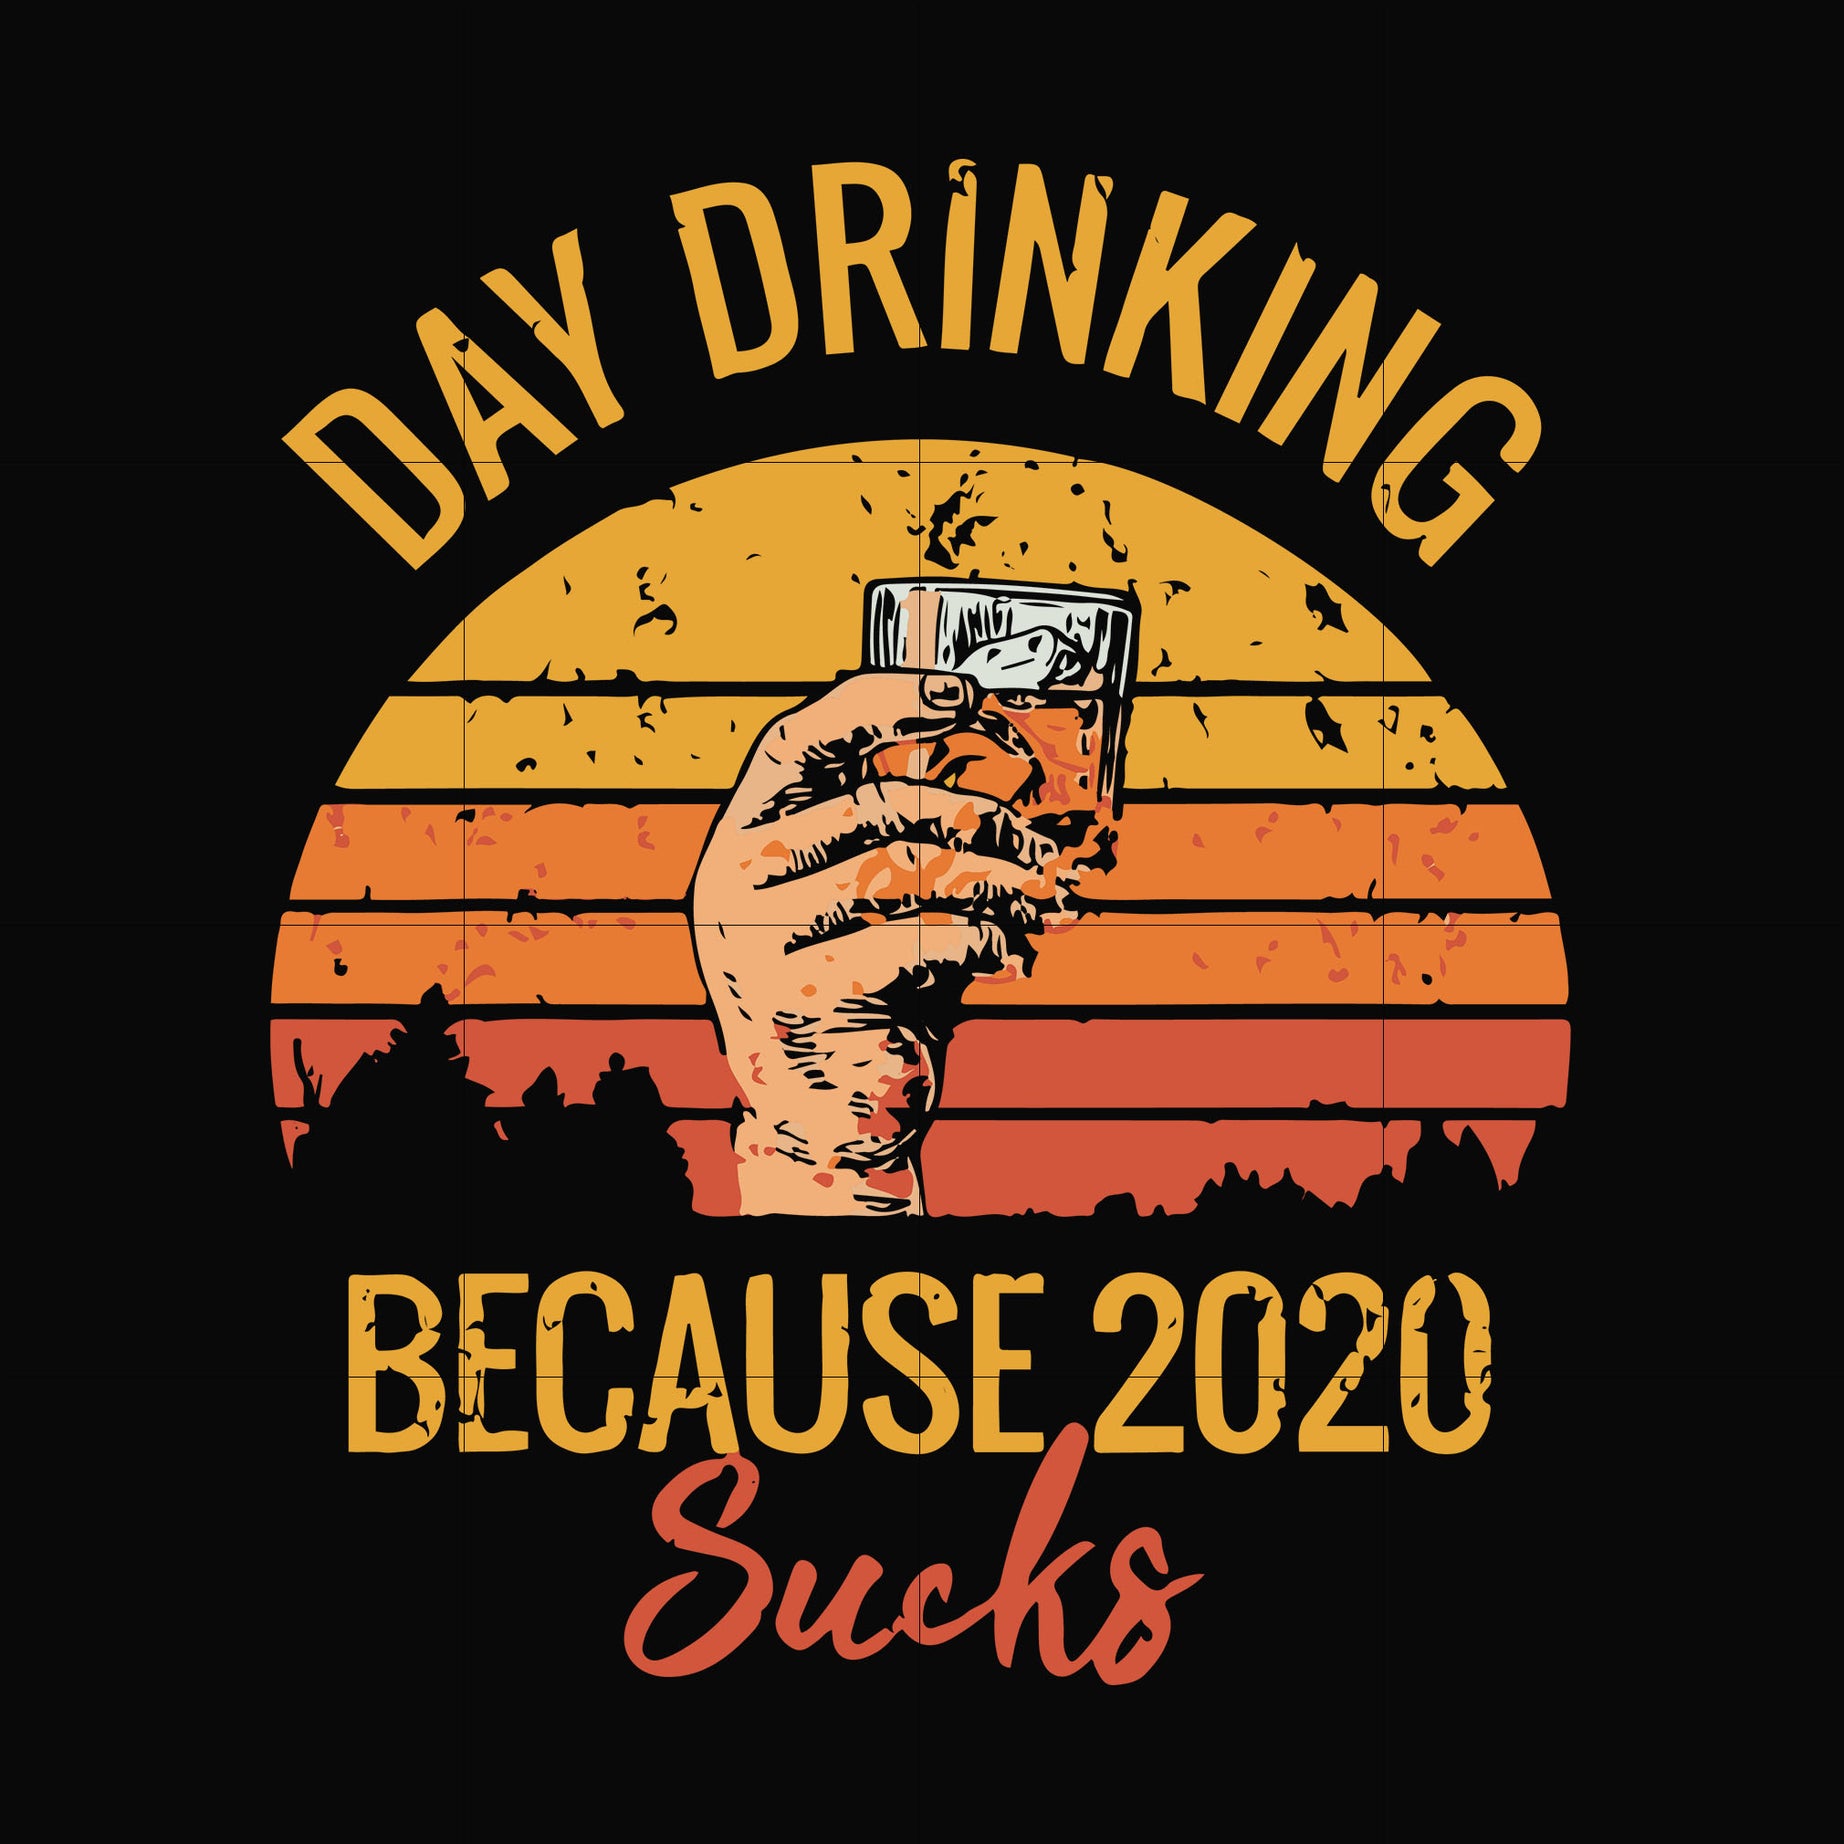 Day drinking 2020 because sucks svg, png, dxf, eps digital file TD2907202